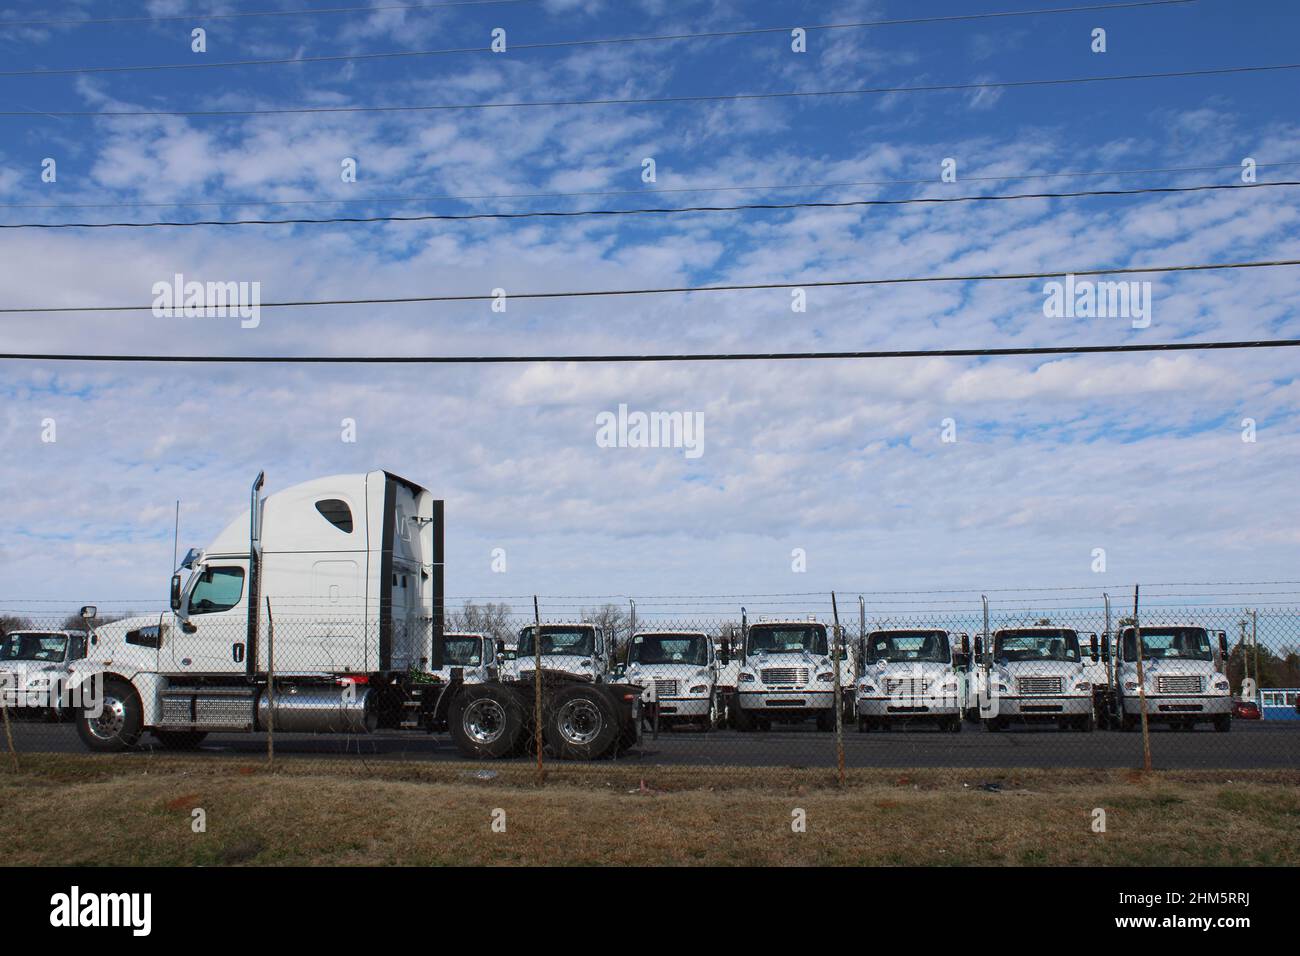 New white trucks on factory lot Stock Photo